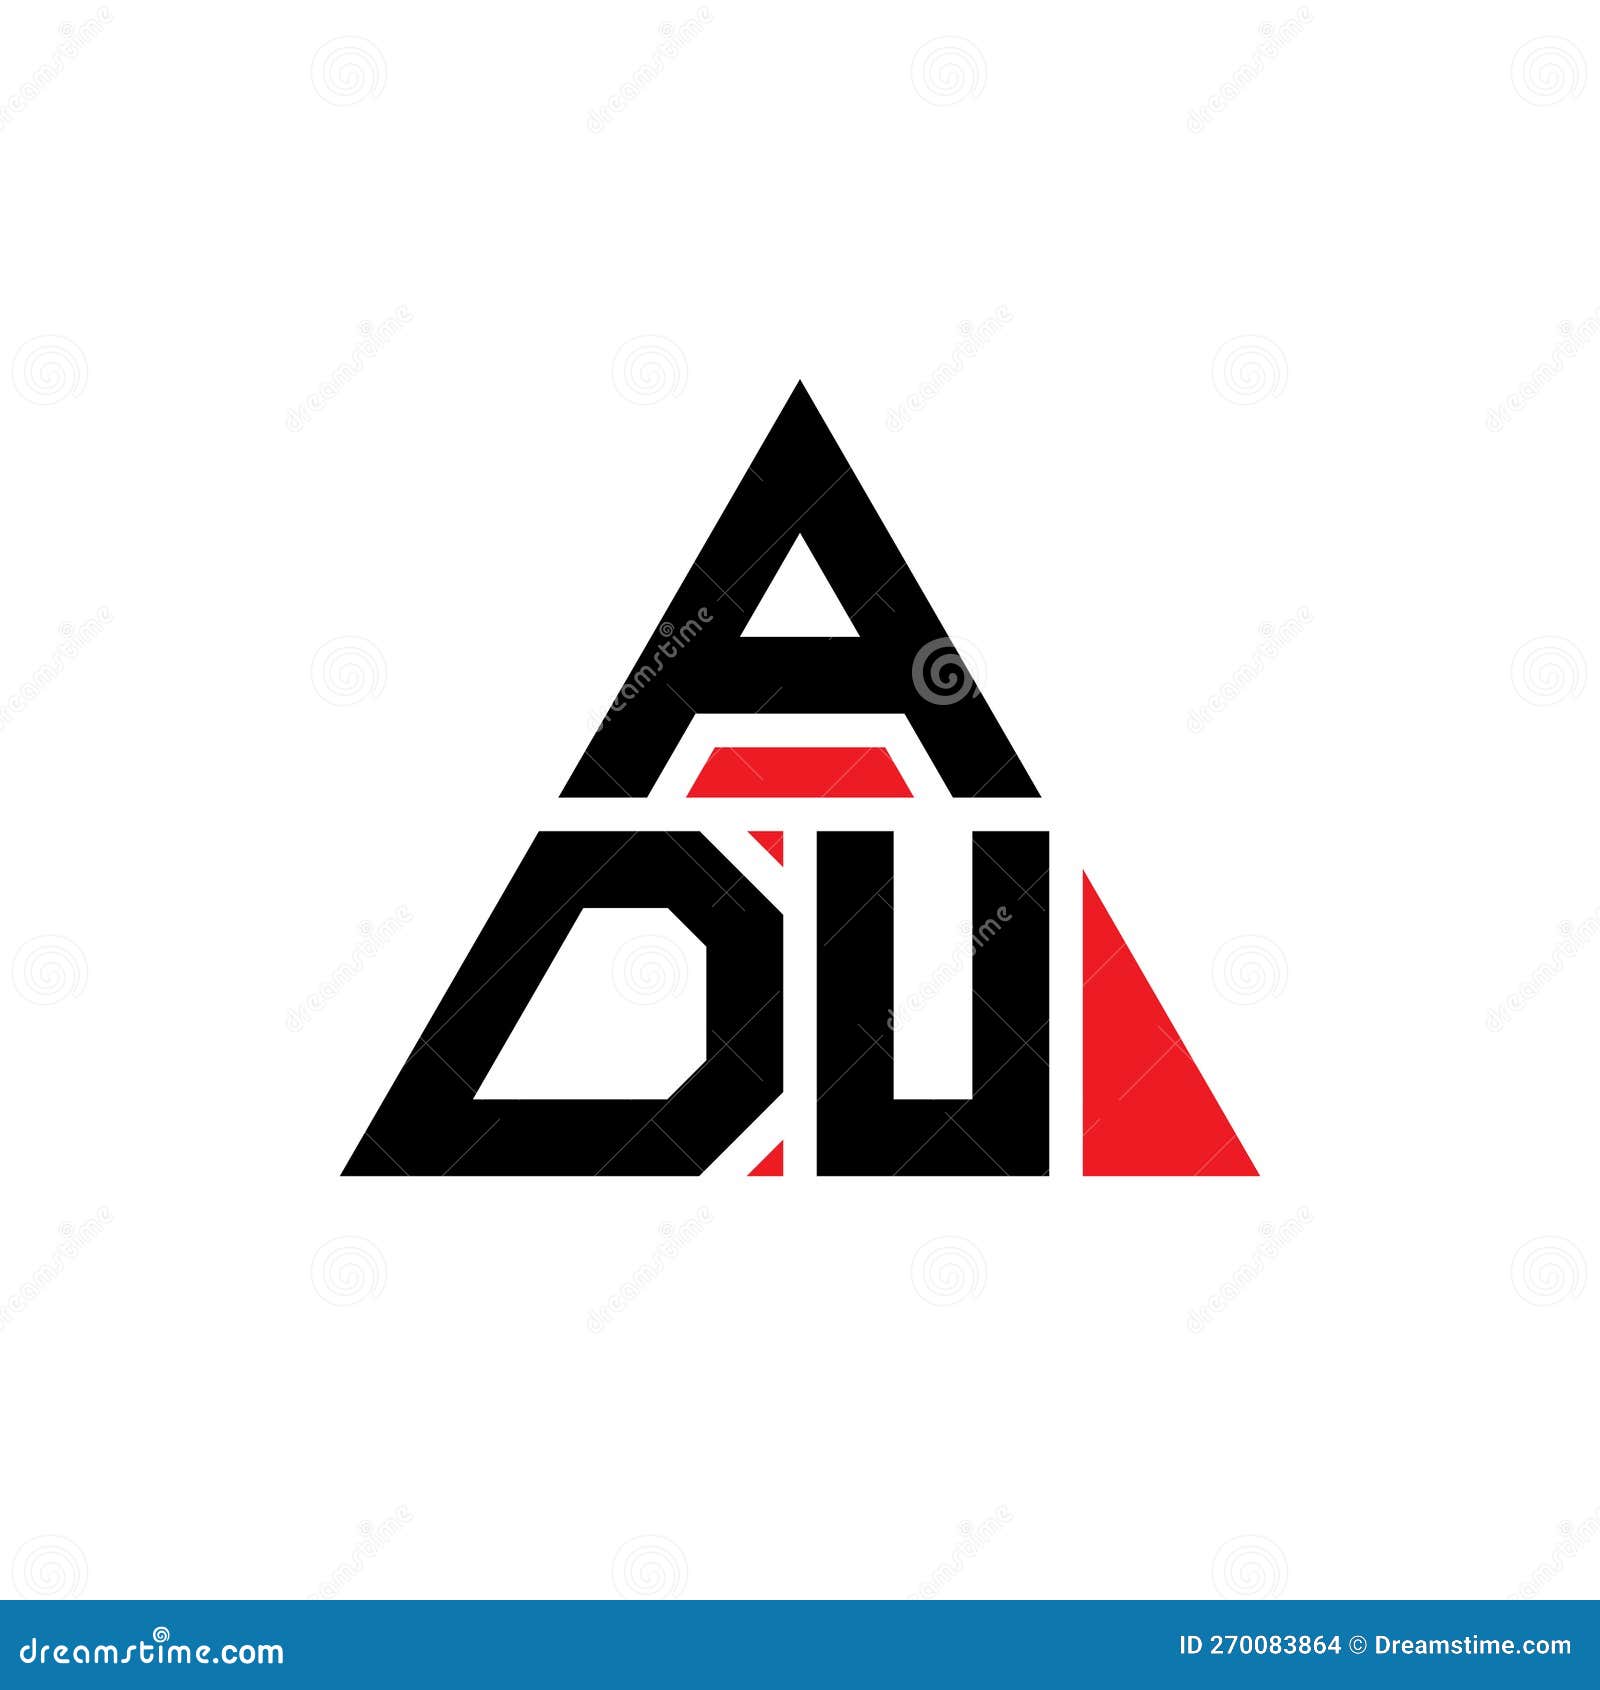 adu triangle letter logo  with triangle . adu triangle logo  monogram. adu triangle  logo template with red